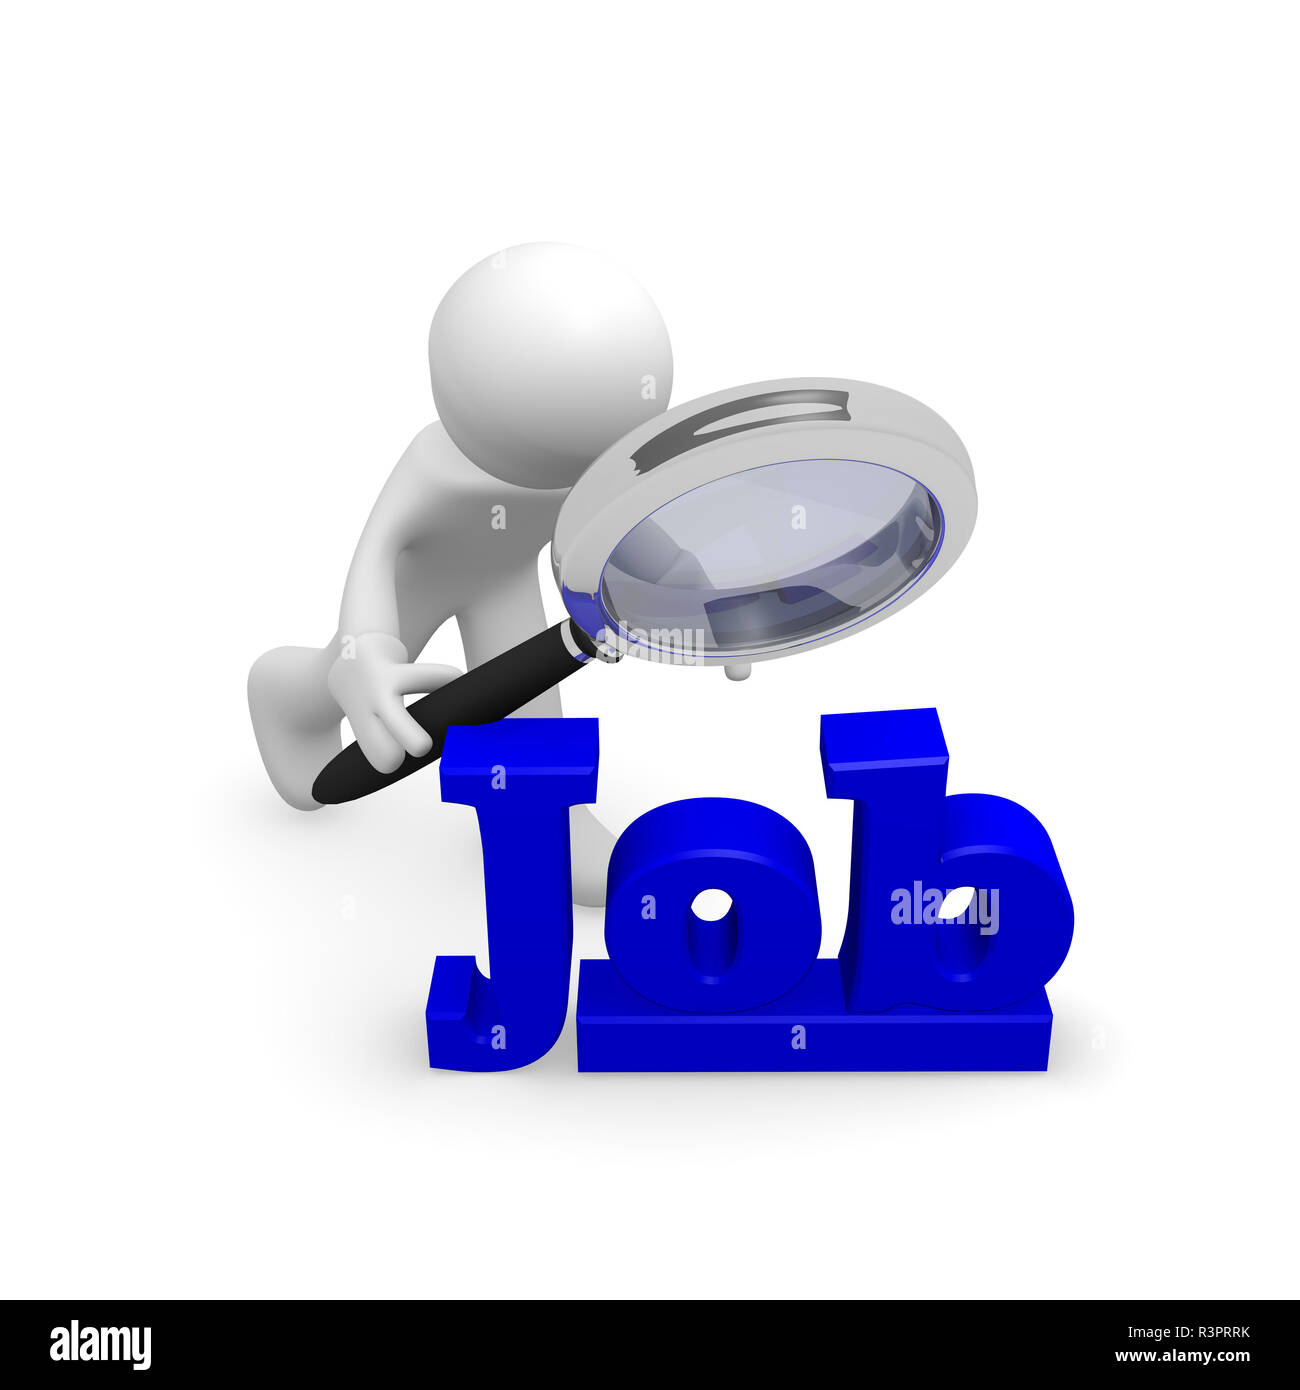 Job search Stock Photo